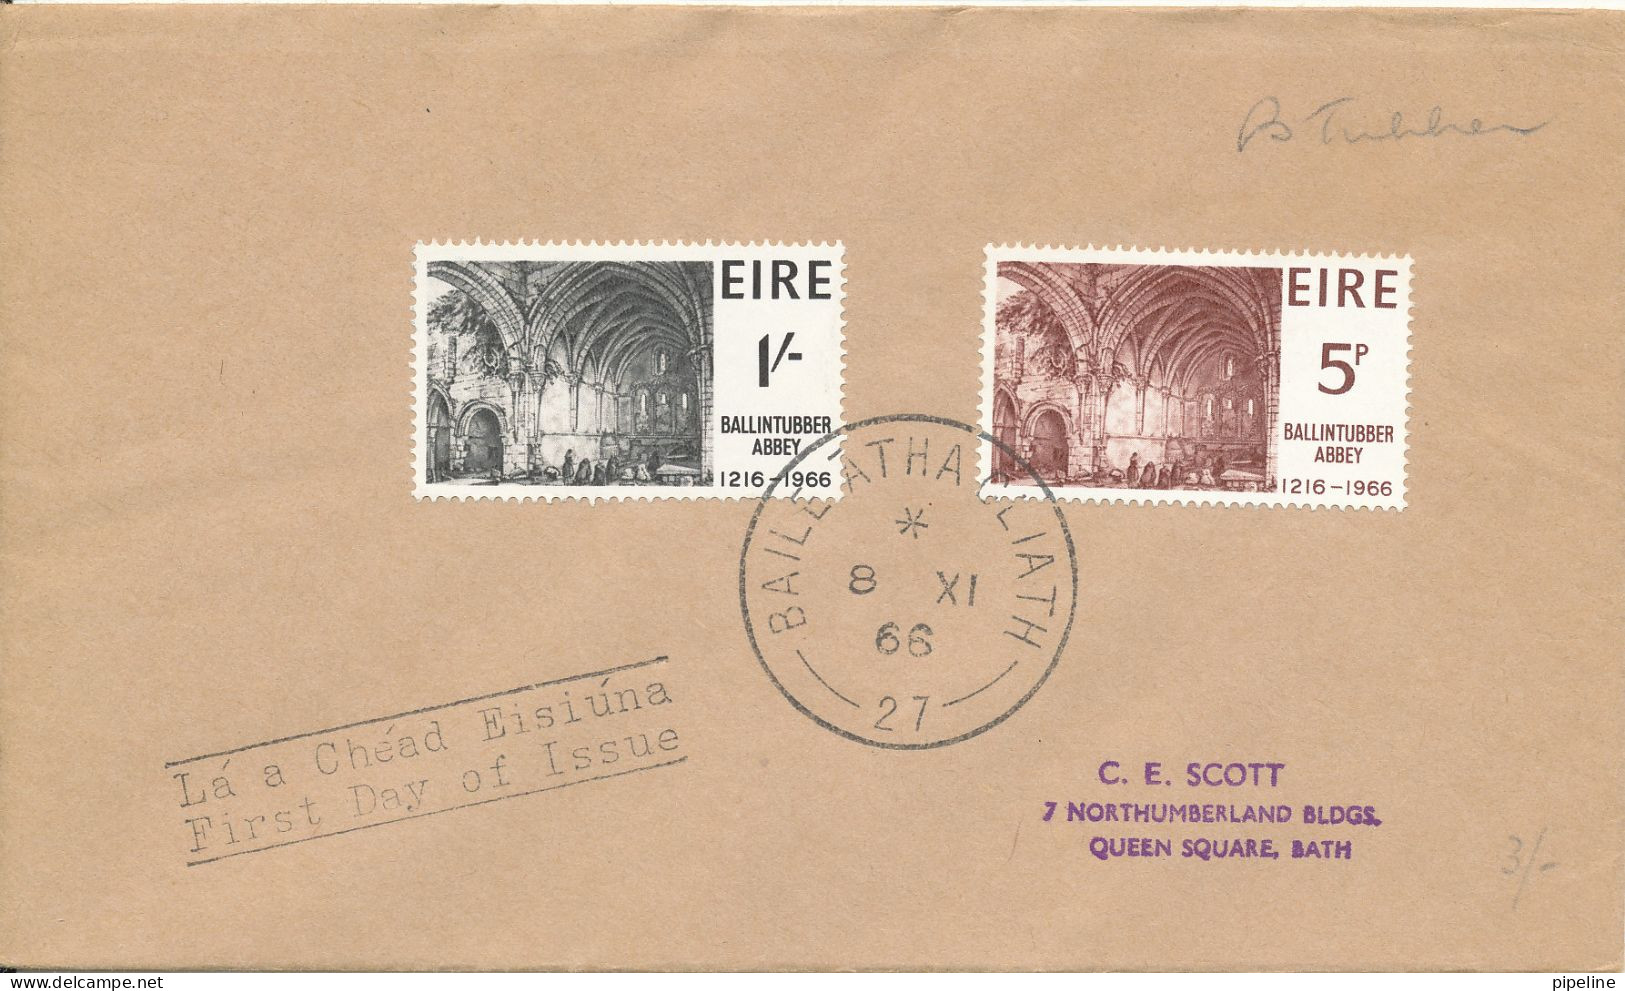 Ireland FDC 8-11-1966 Ballintubber Abbey 1216 - 1966 Complete - FDC